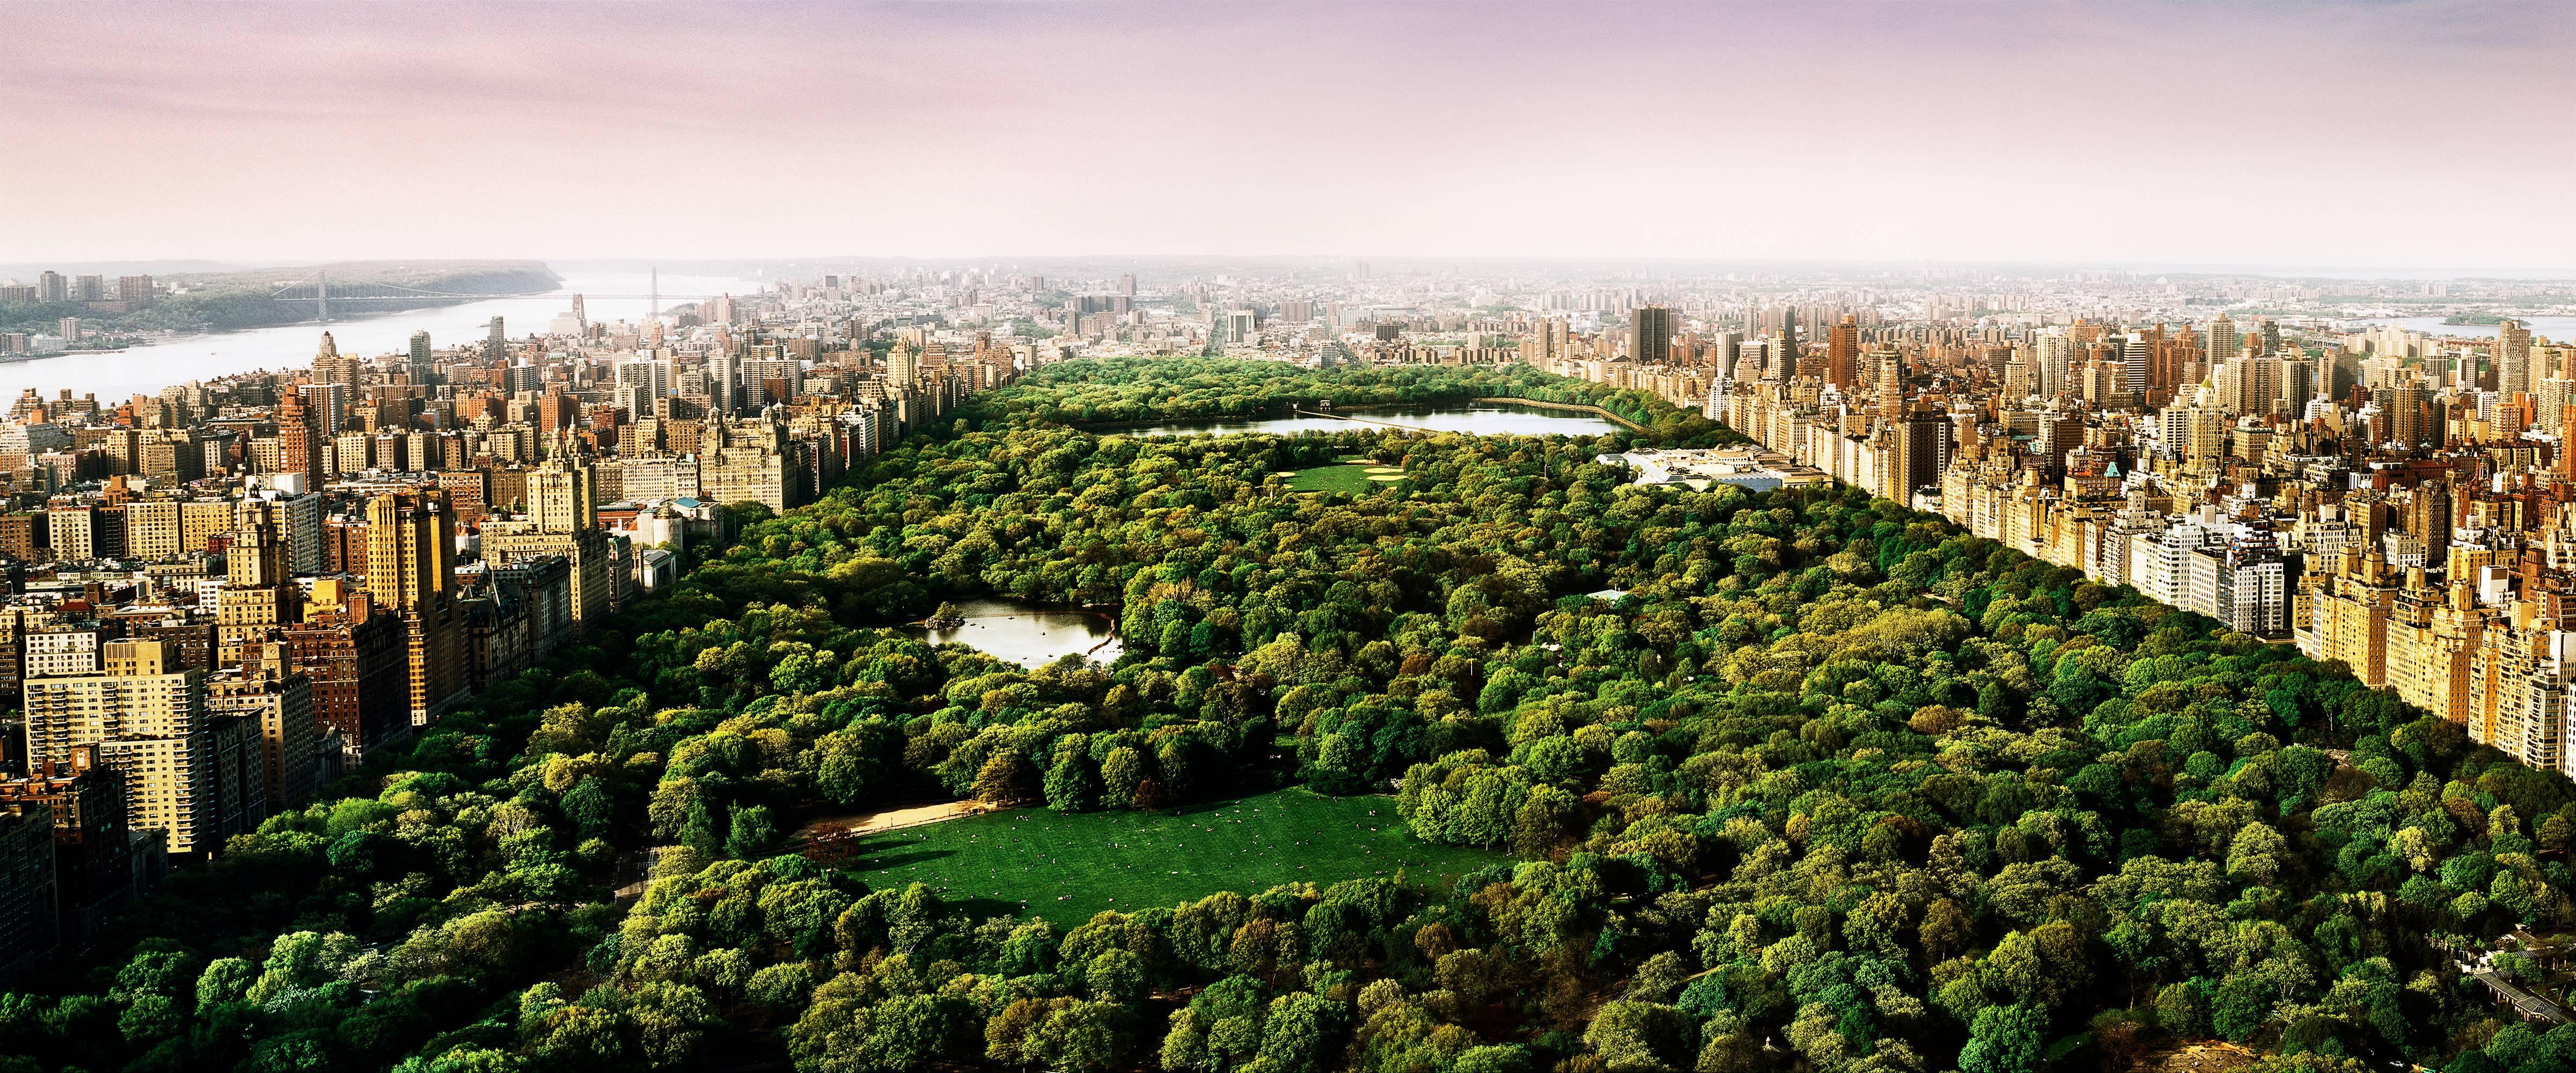 David Drebin Landscape Photograph - Dreams of Central Park